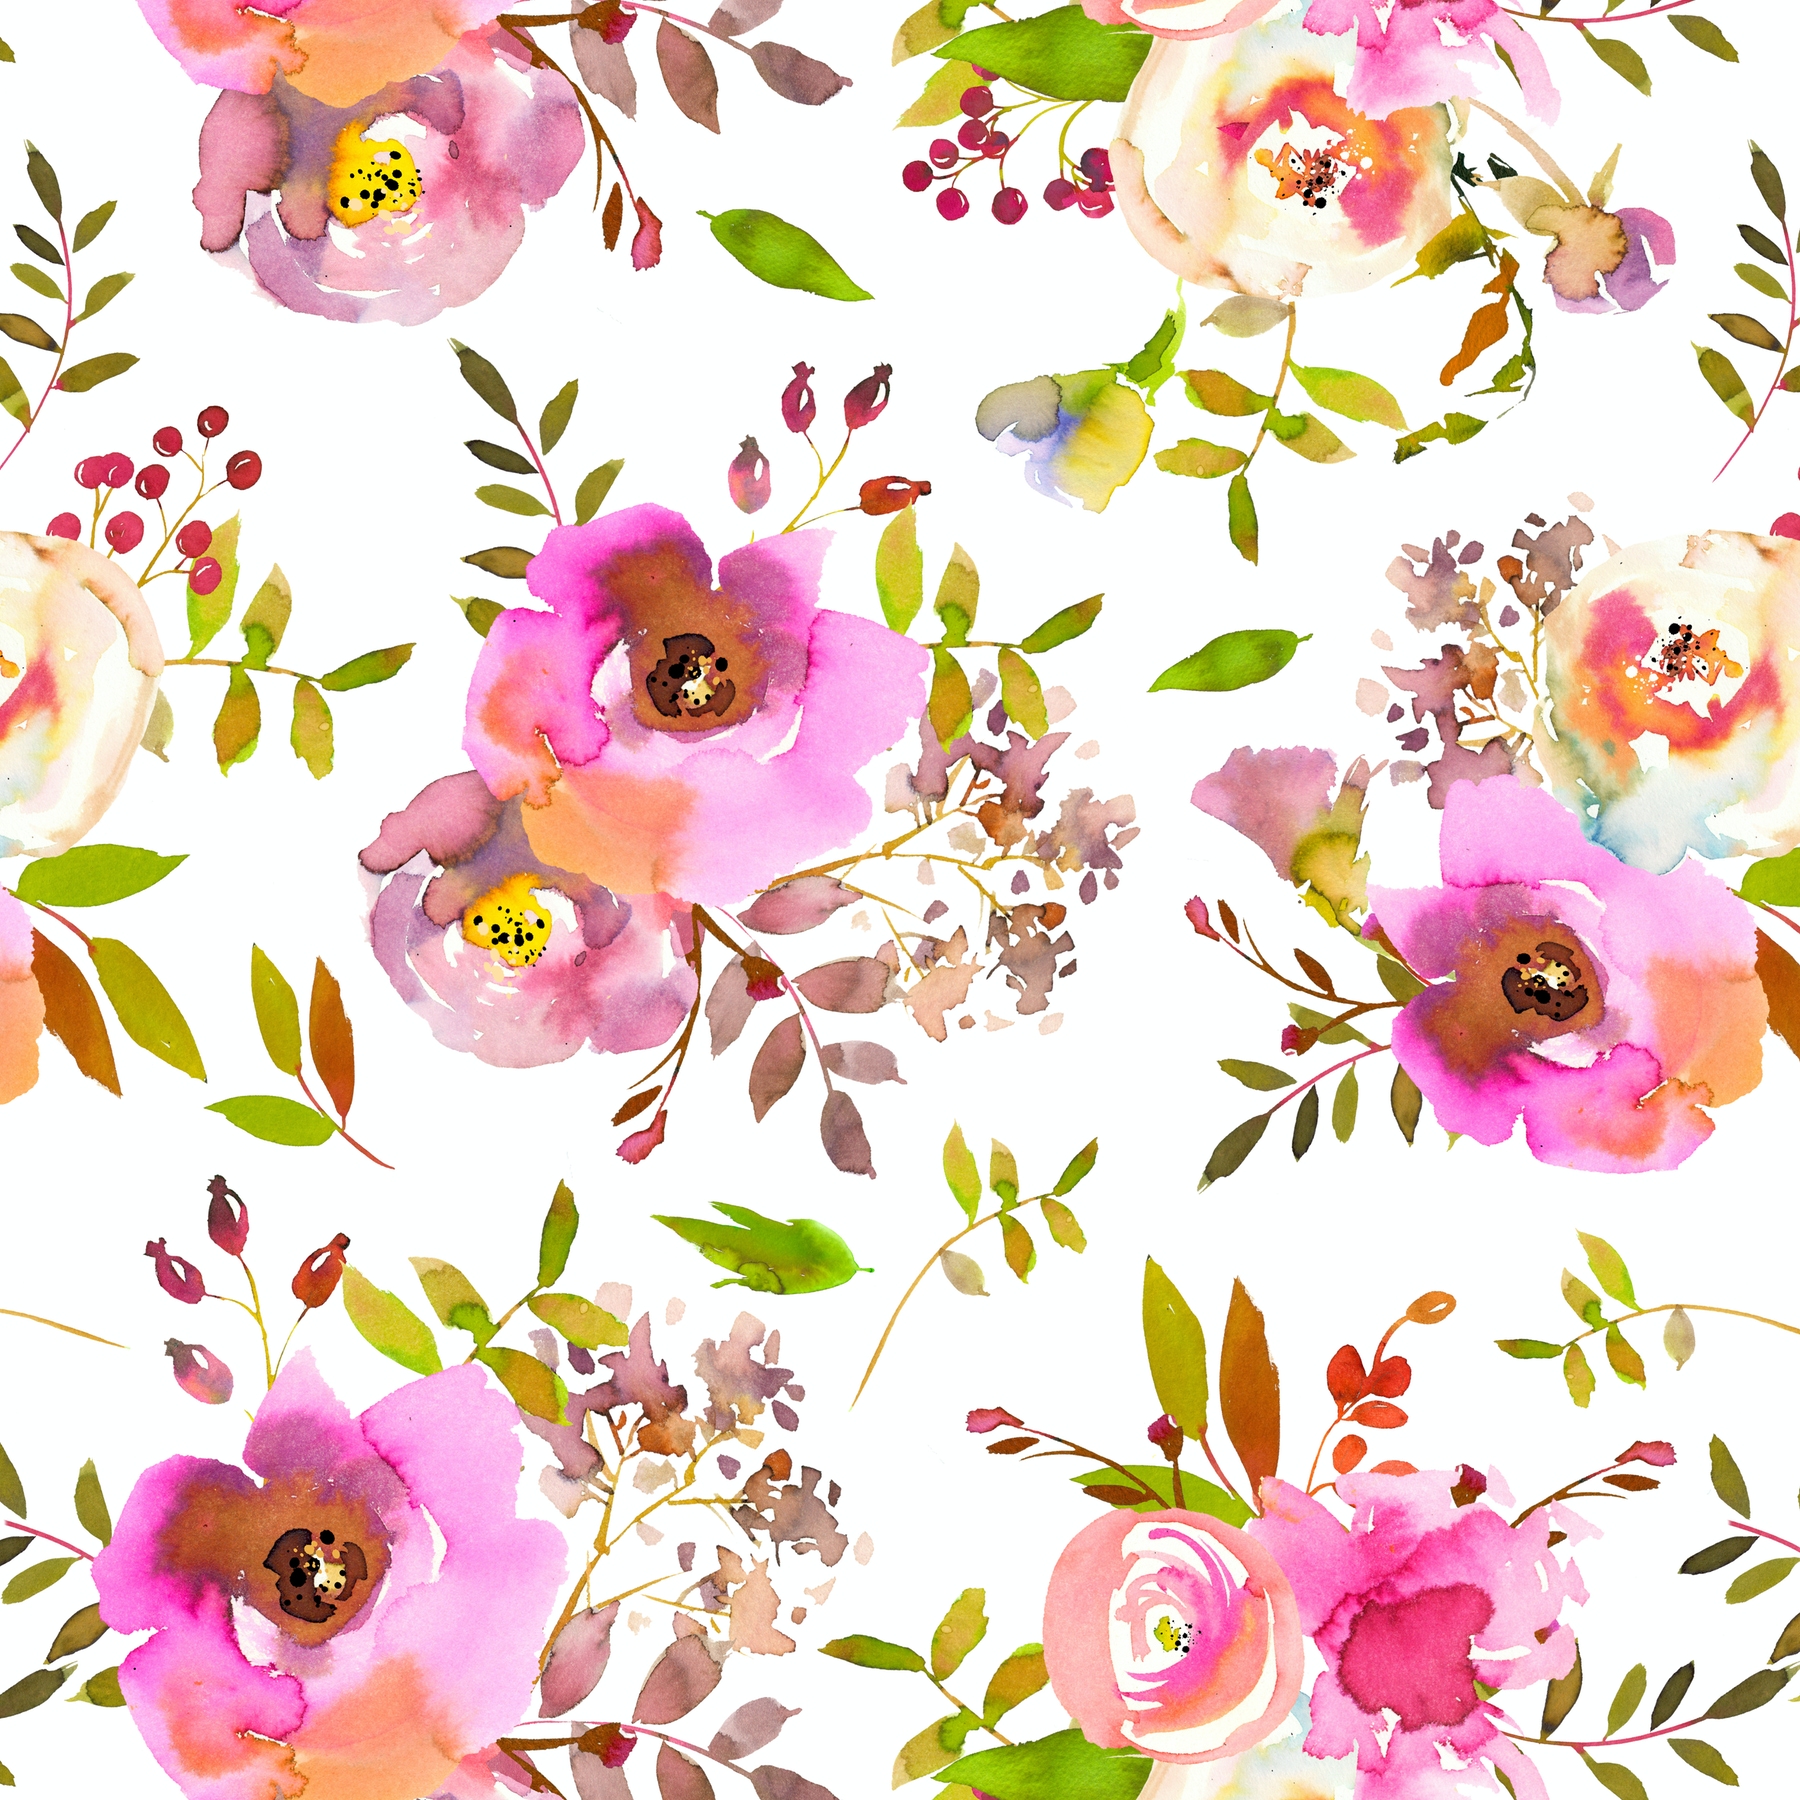 Buy Pink Boho Flowers wallpaper - Free US shipping at Happywall.com